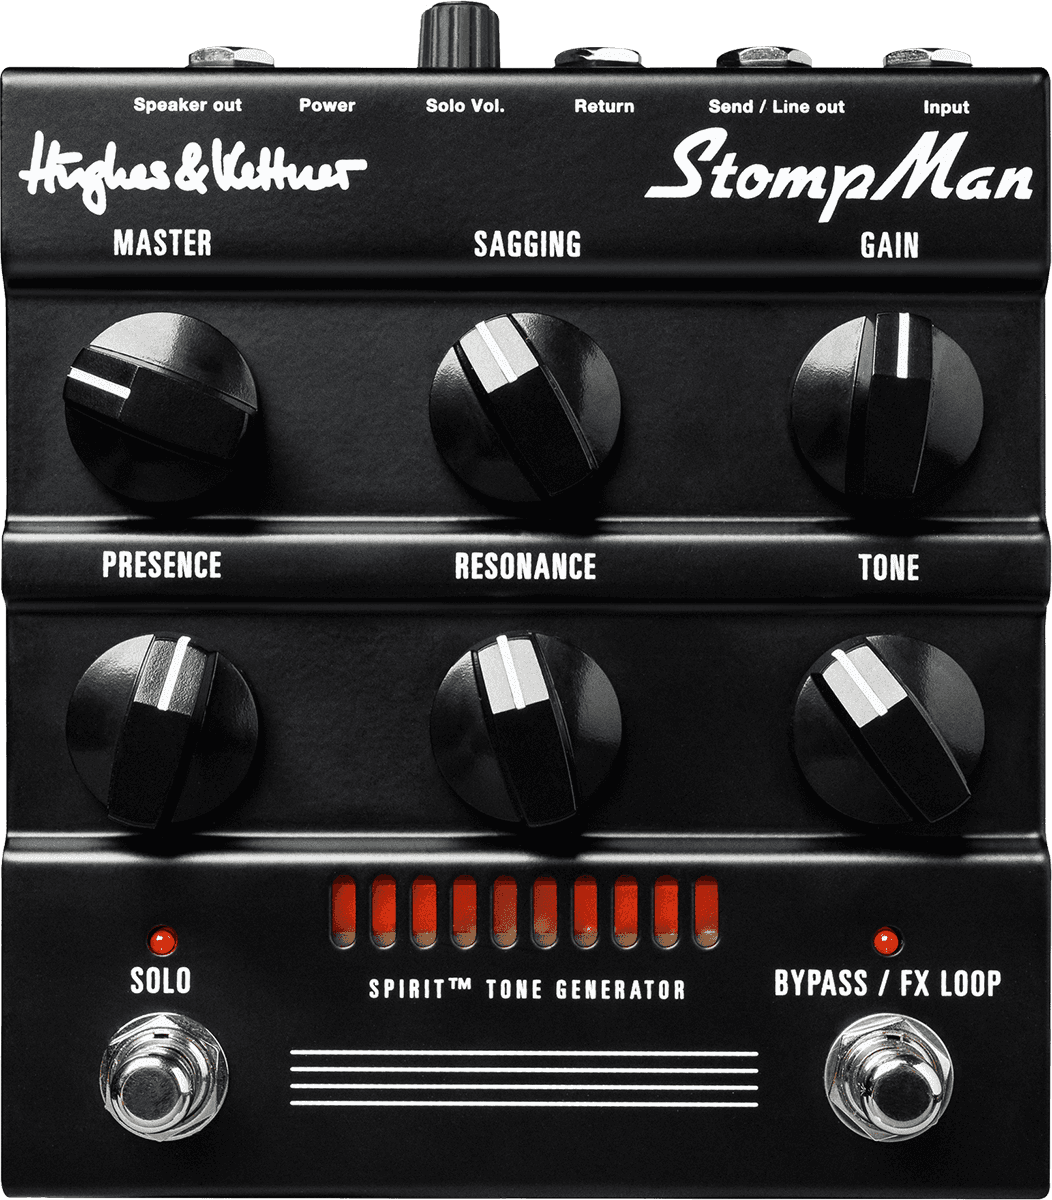 Hughes & Kettner Stompman - Electric guitar preamp in rack - Main picture